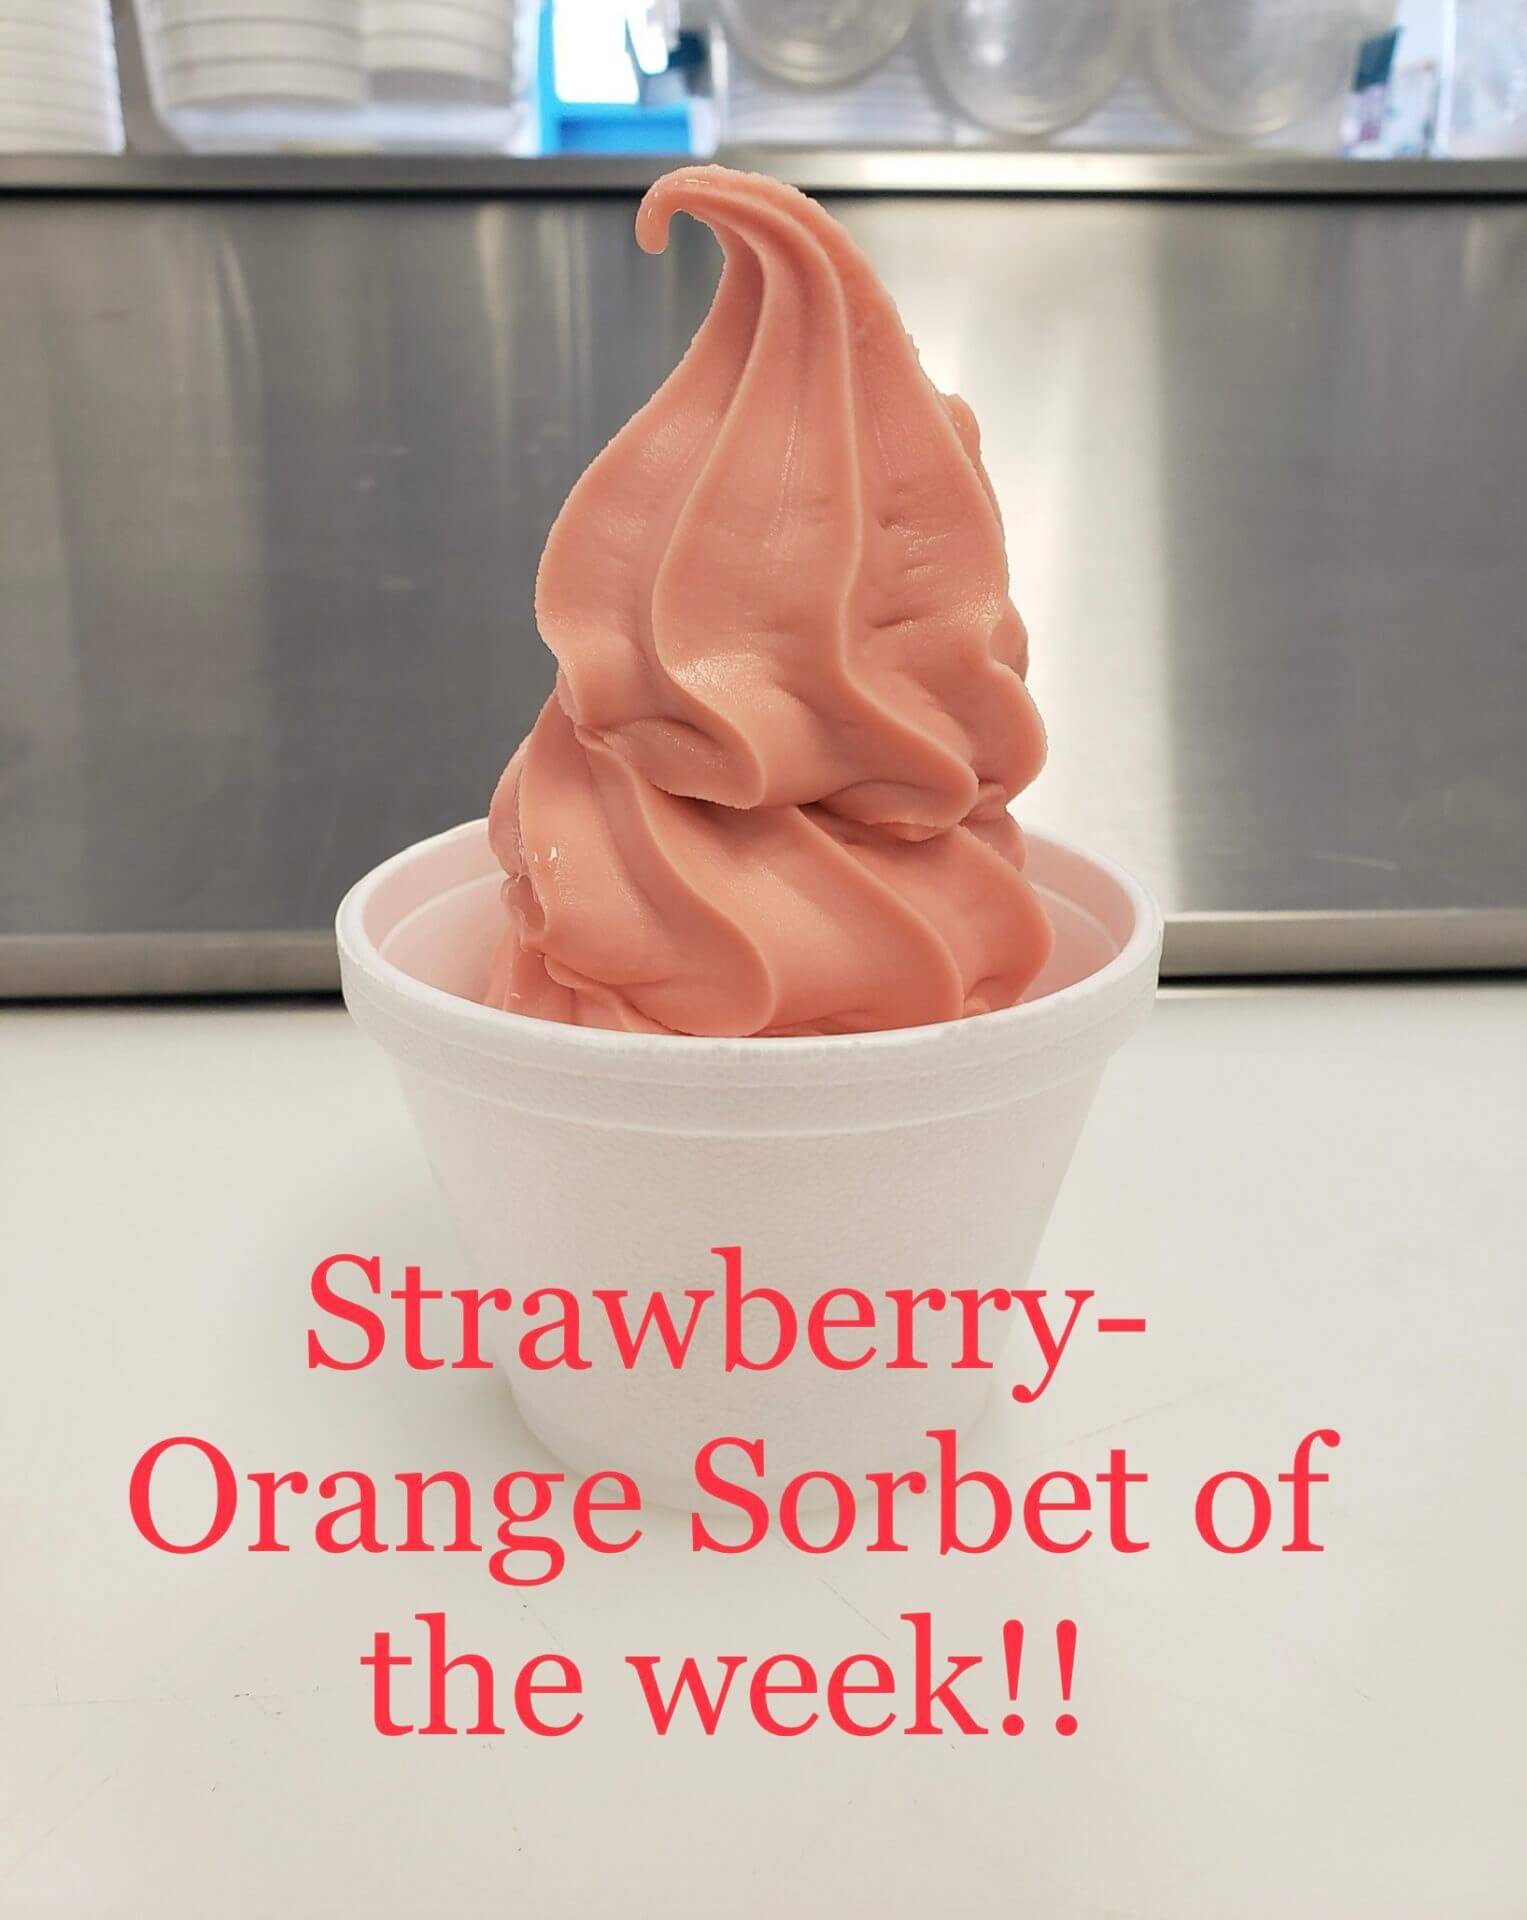 Strawberry-Orange Sorbet of the week